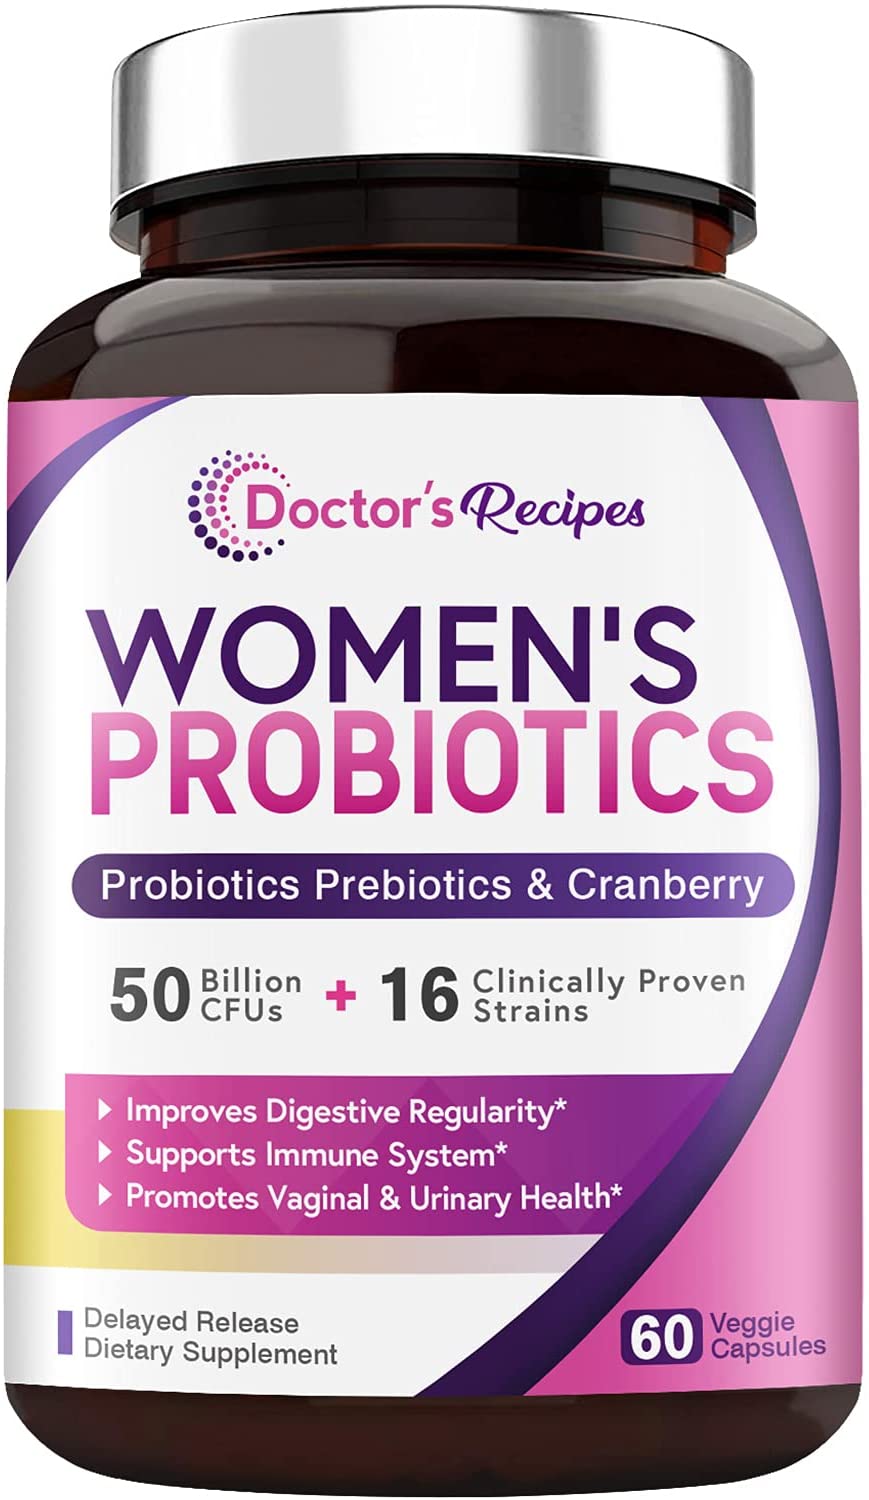 Doctor’s Recipes Cranberry & Prebiotic Probiotics For Women, 60-Count